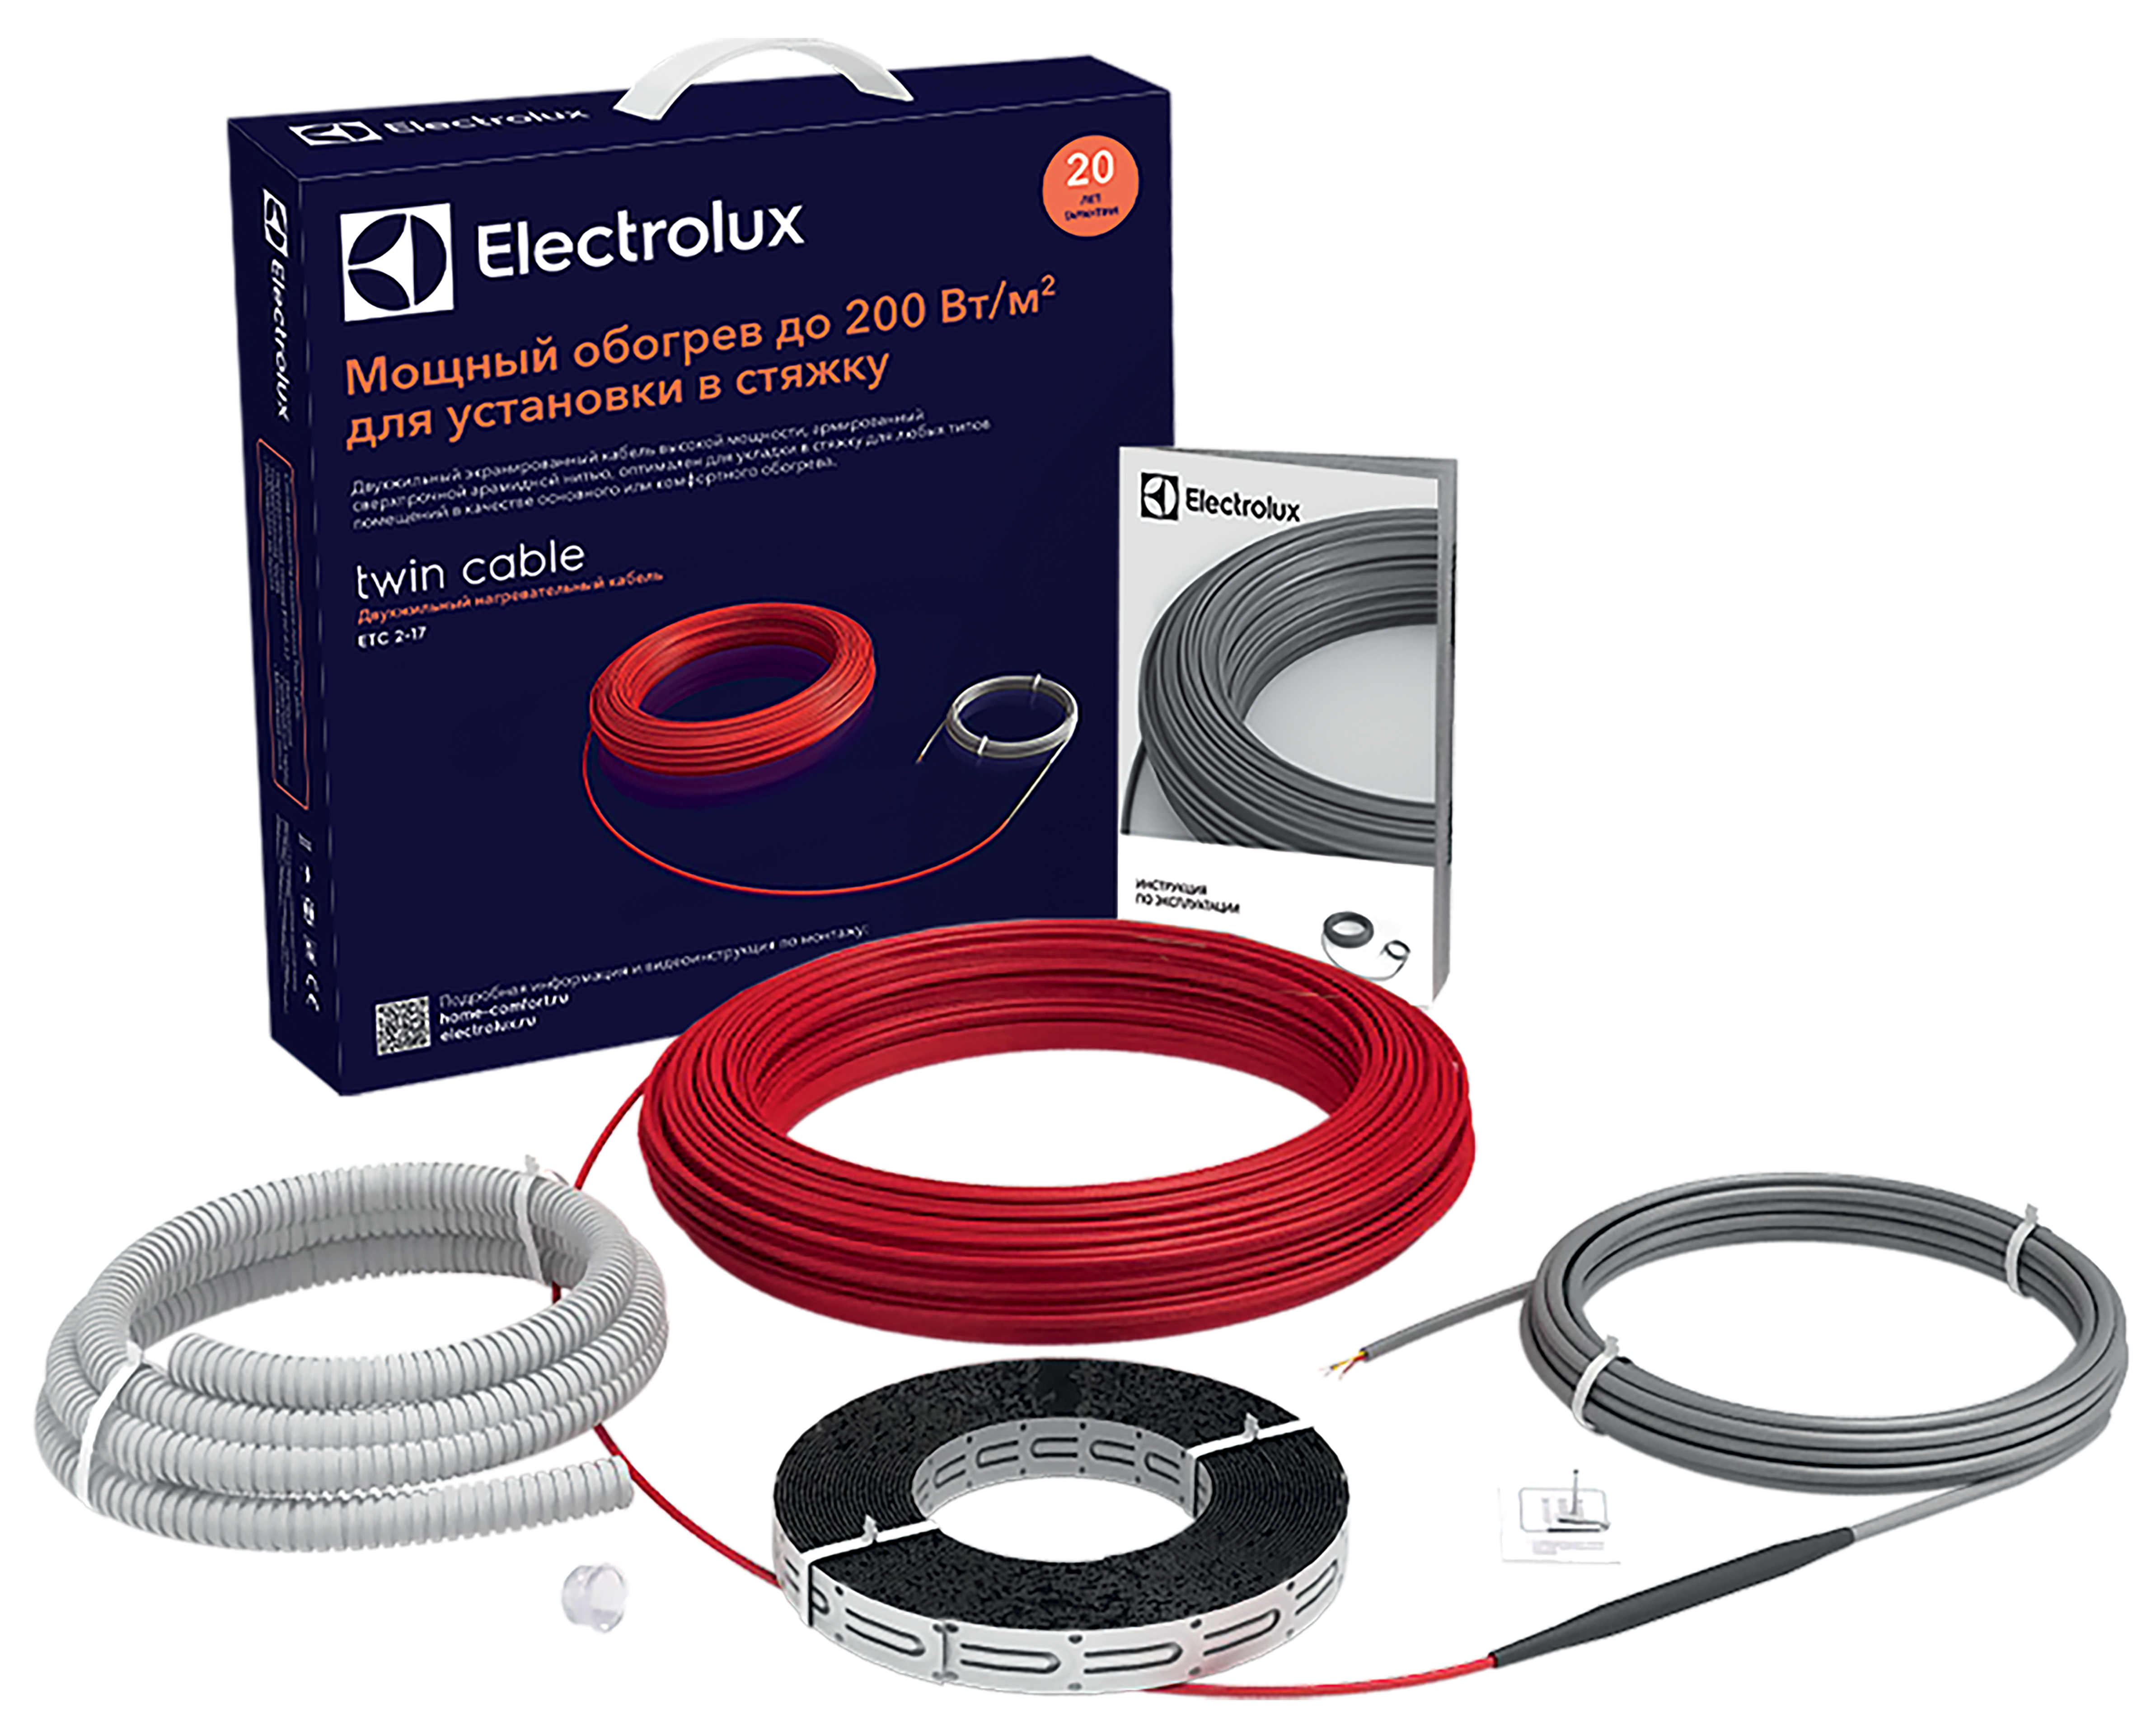 Теплый пол Electrolux под ламинат Electrolux Twin Cable ETC 2-17-200